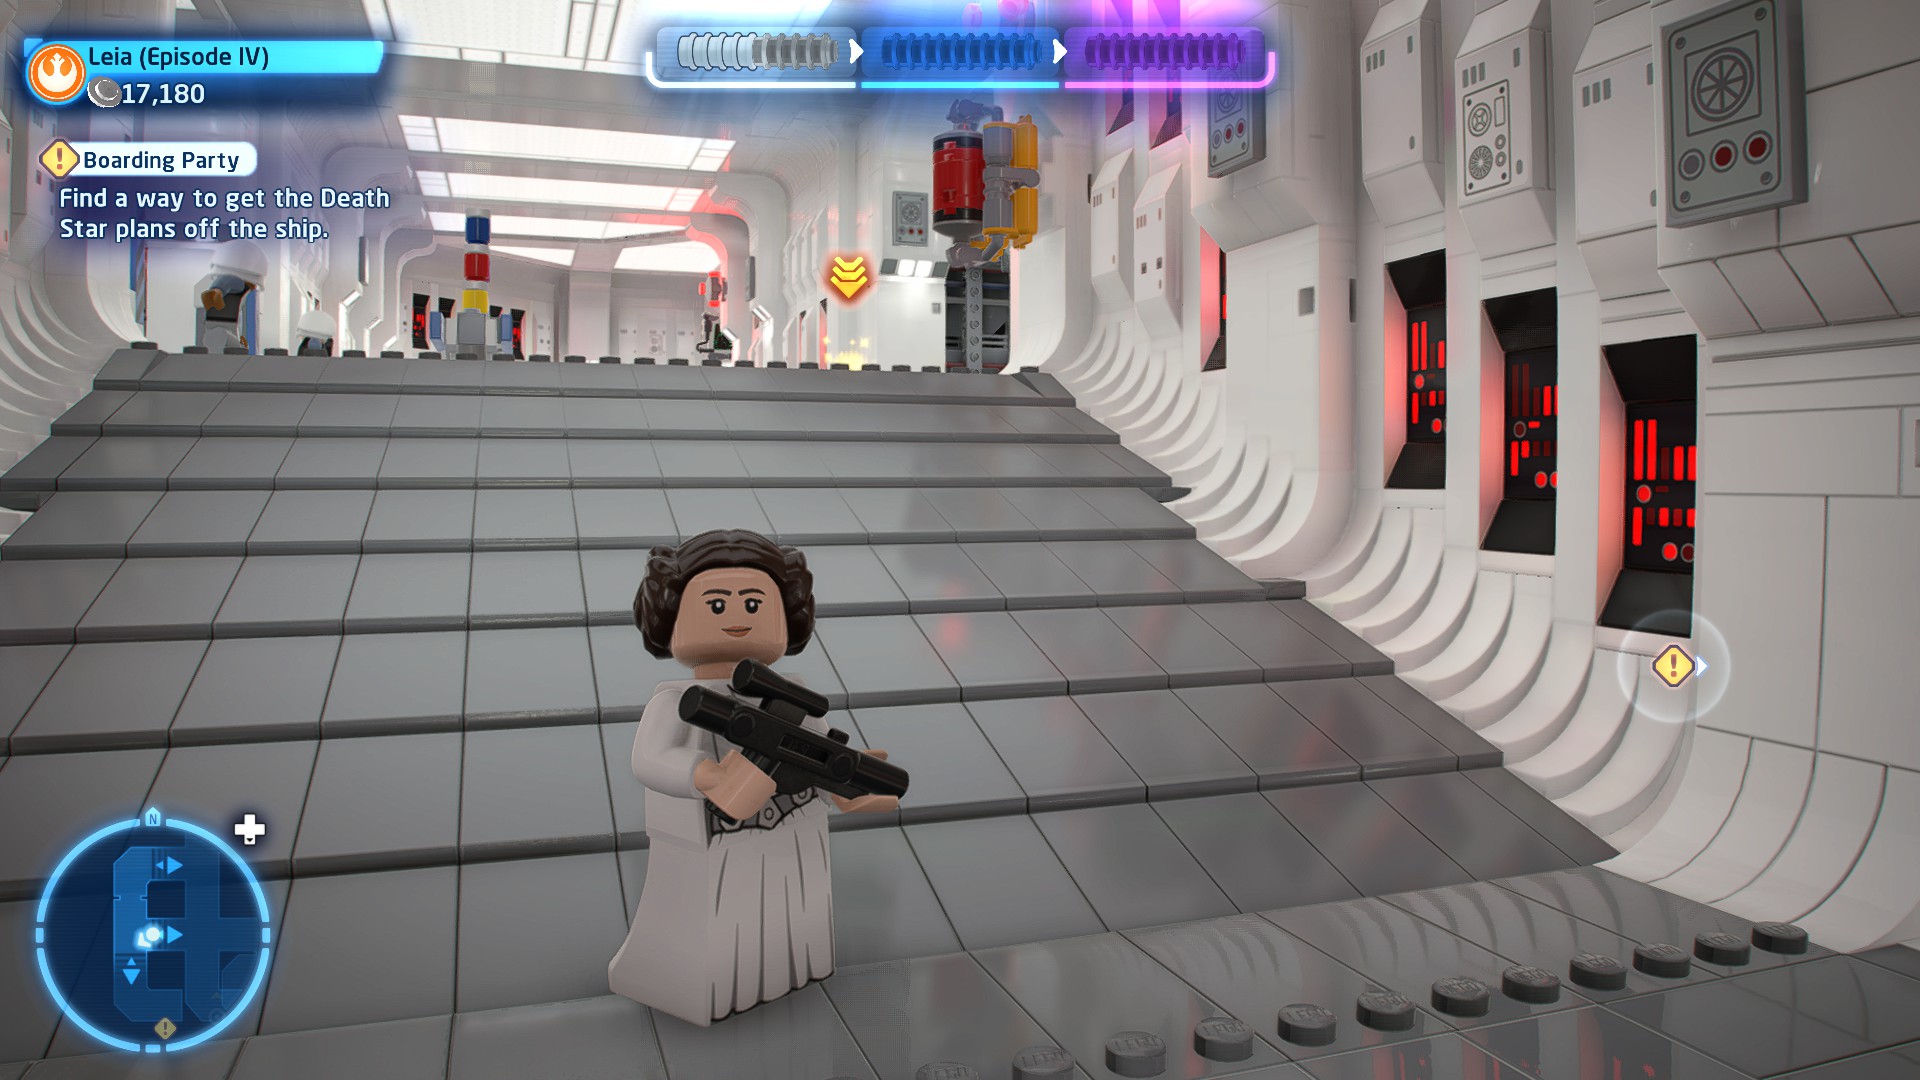 Lego Star Wars The Skywalker Saga Co-op Guide 